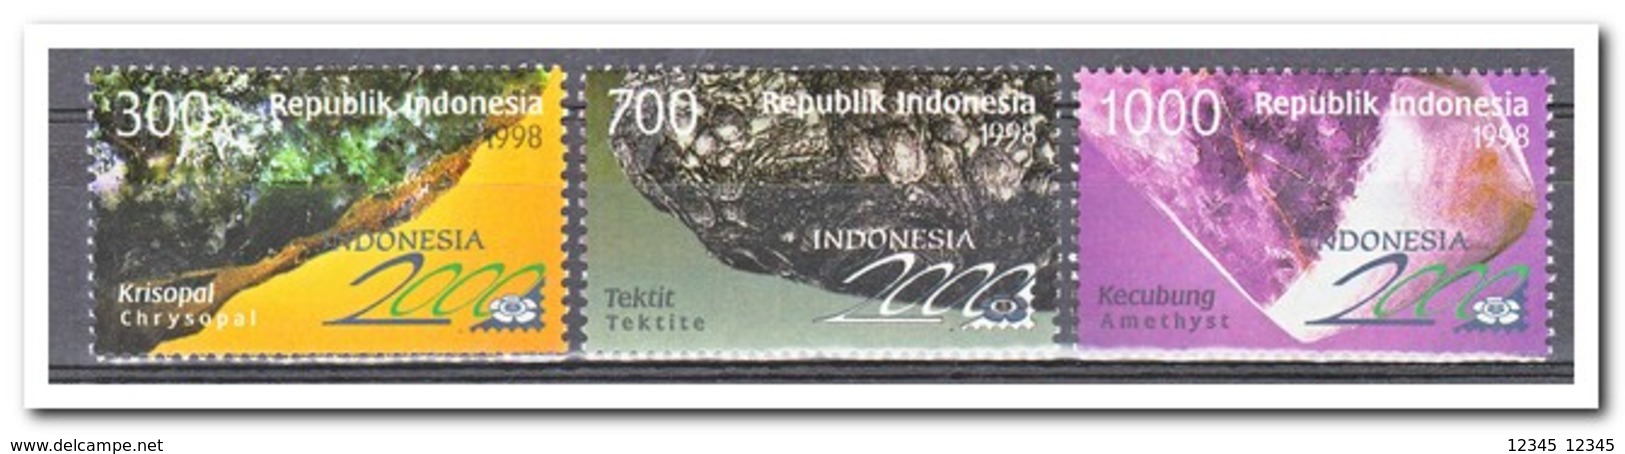 Indonesië 1998, Postfris MNH, International Stamp Exhibition Indonesia 2000 - Indonesië